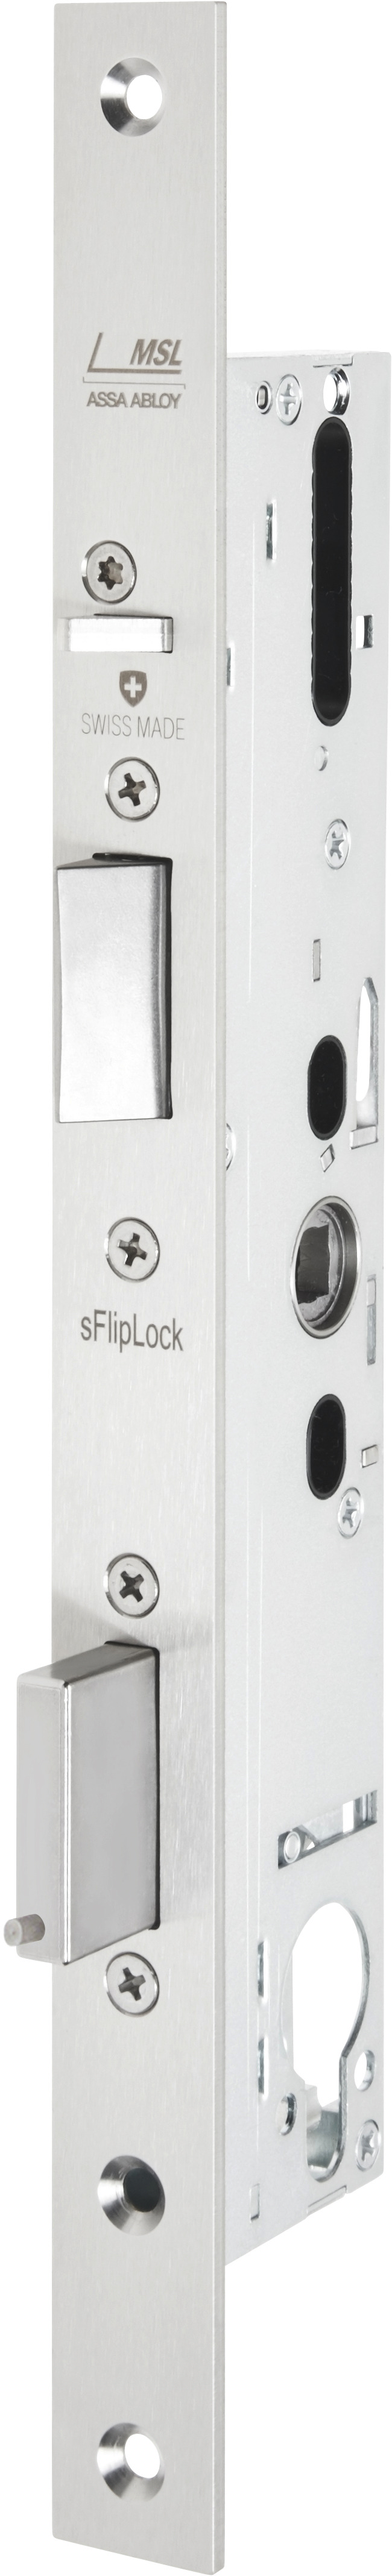 sFlipLock panic security mortise lock 14444PE-ZF